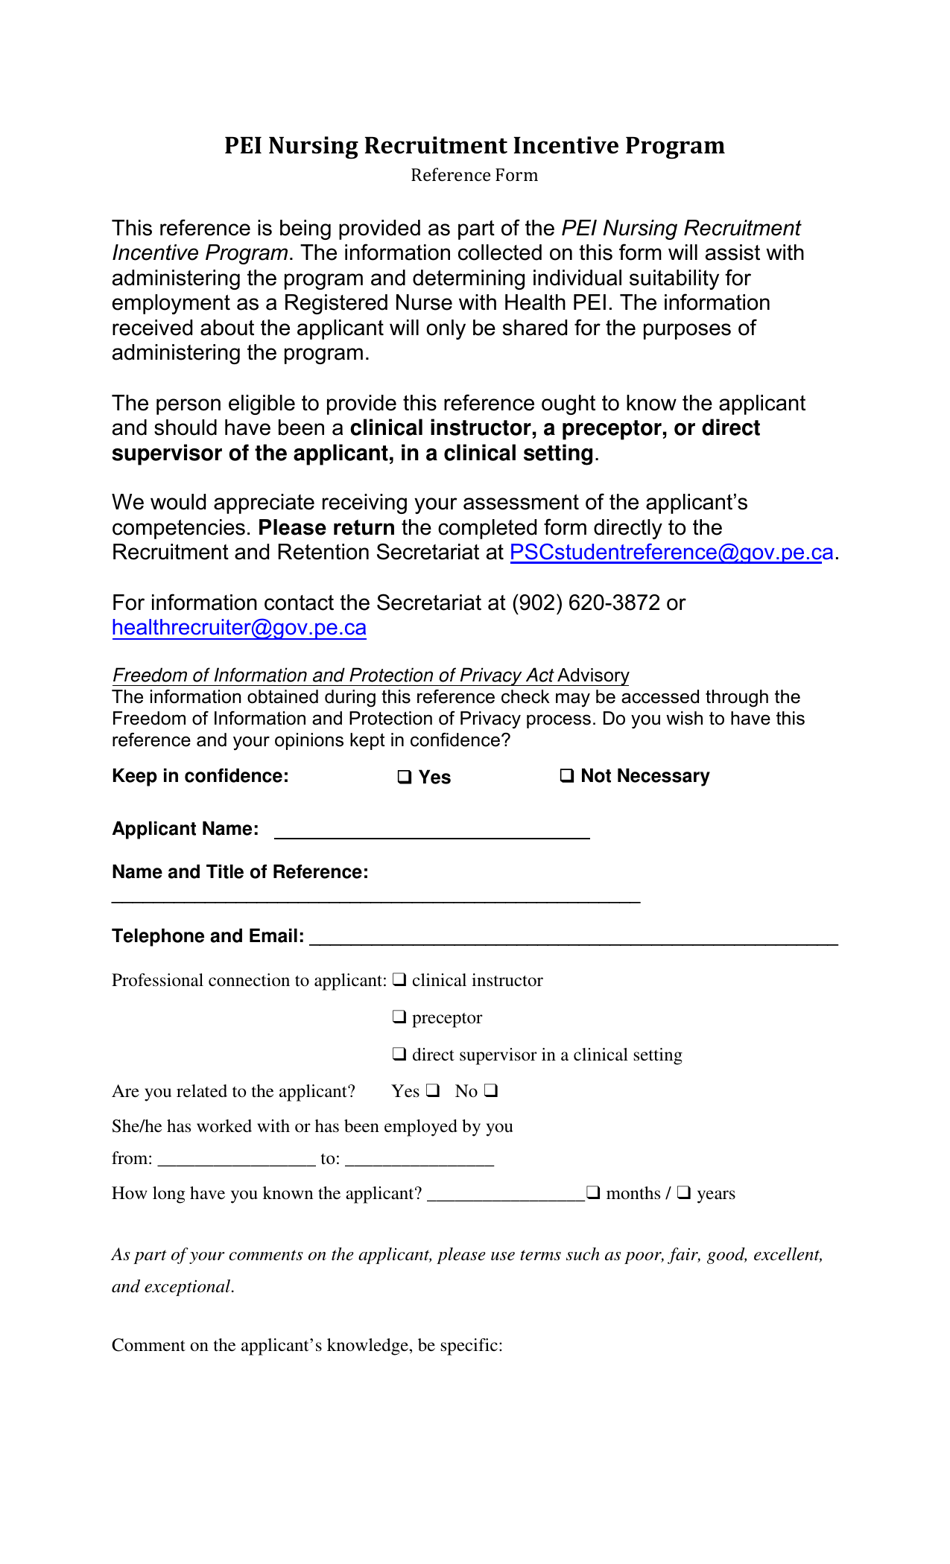 Pei Nursing Recruitment Incentive Program Reference Form - Prince Edward Island, Canada, Page 1